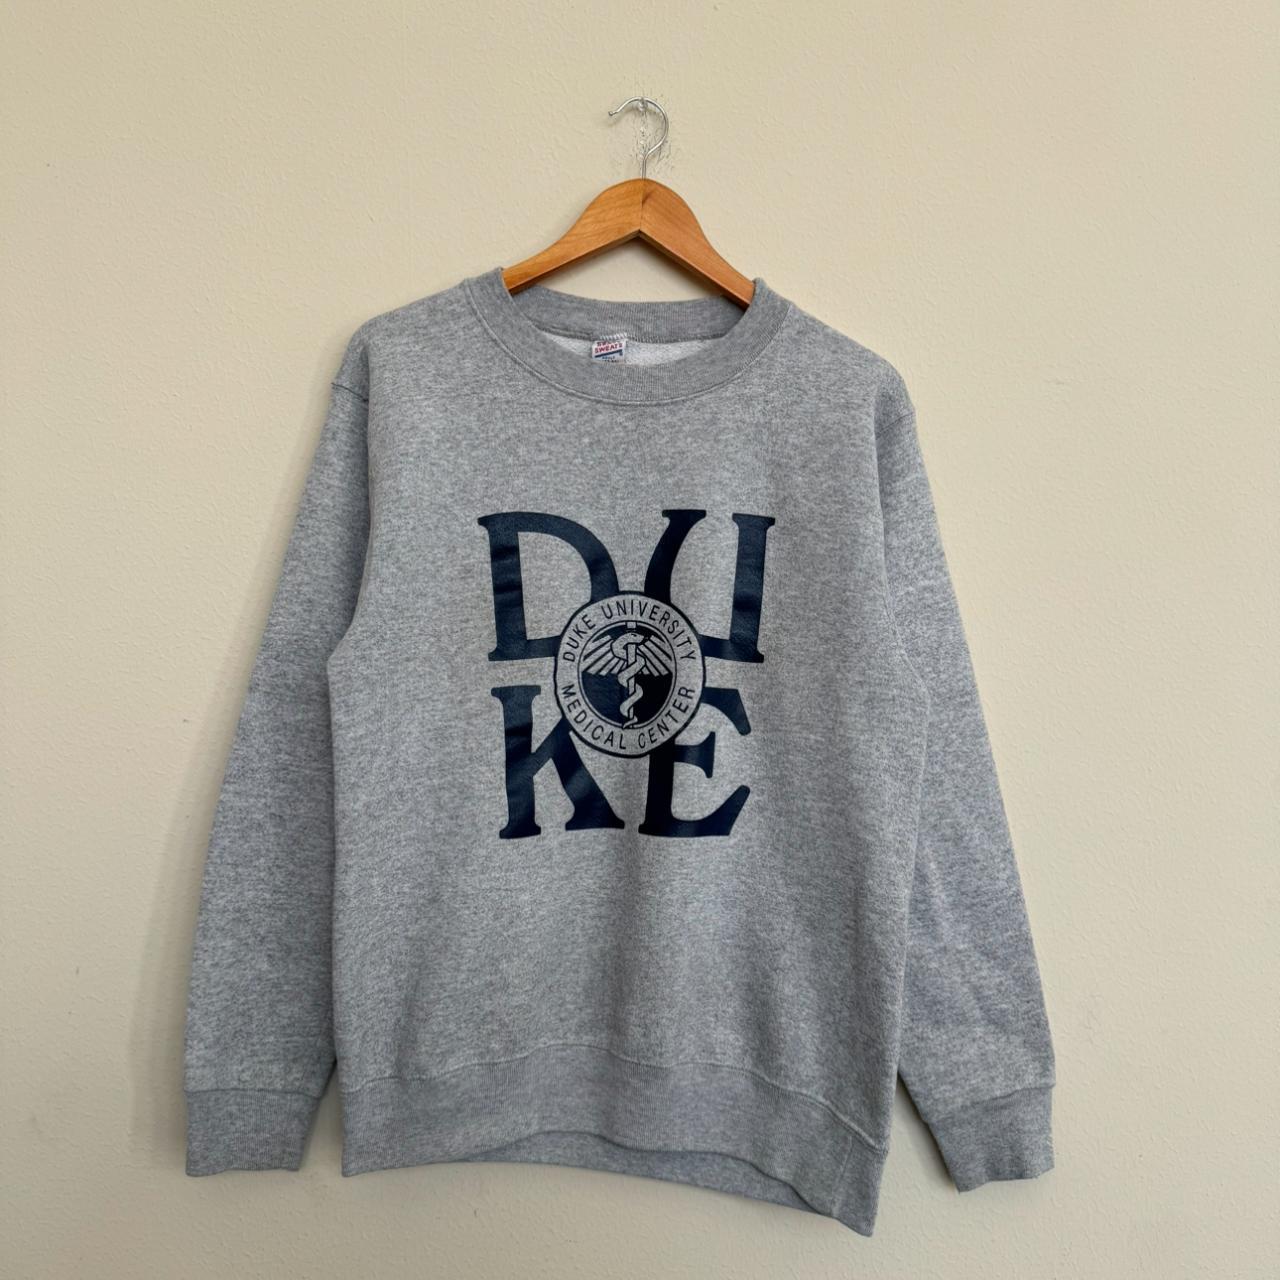 Duke Men's Grey and Navy Sweatshirt